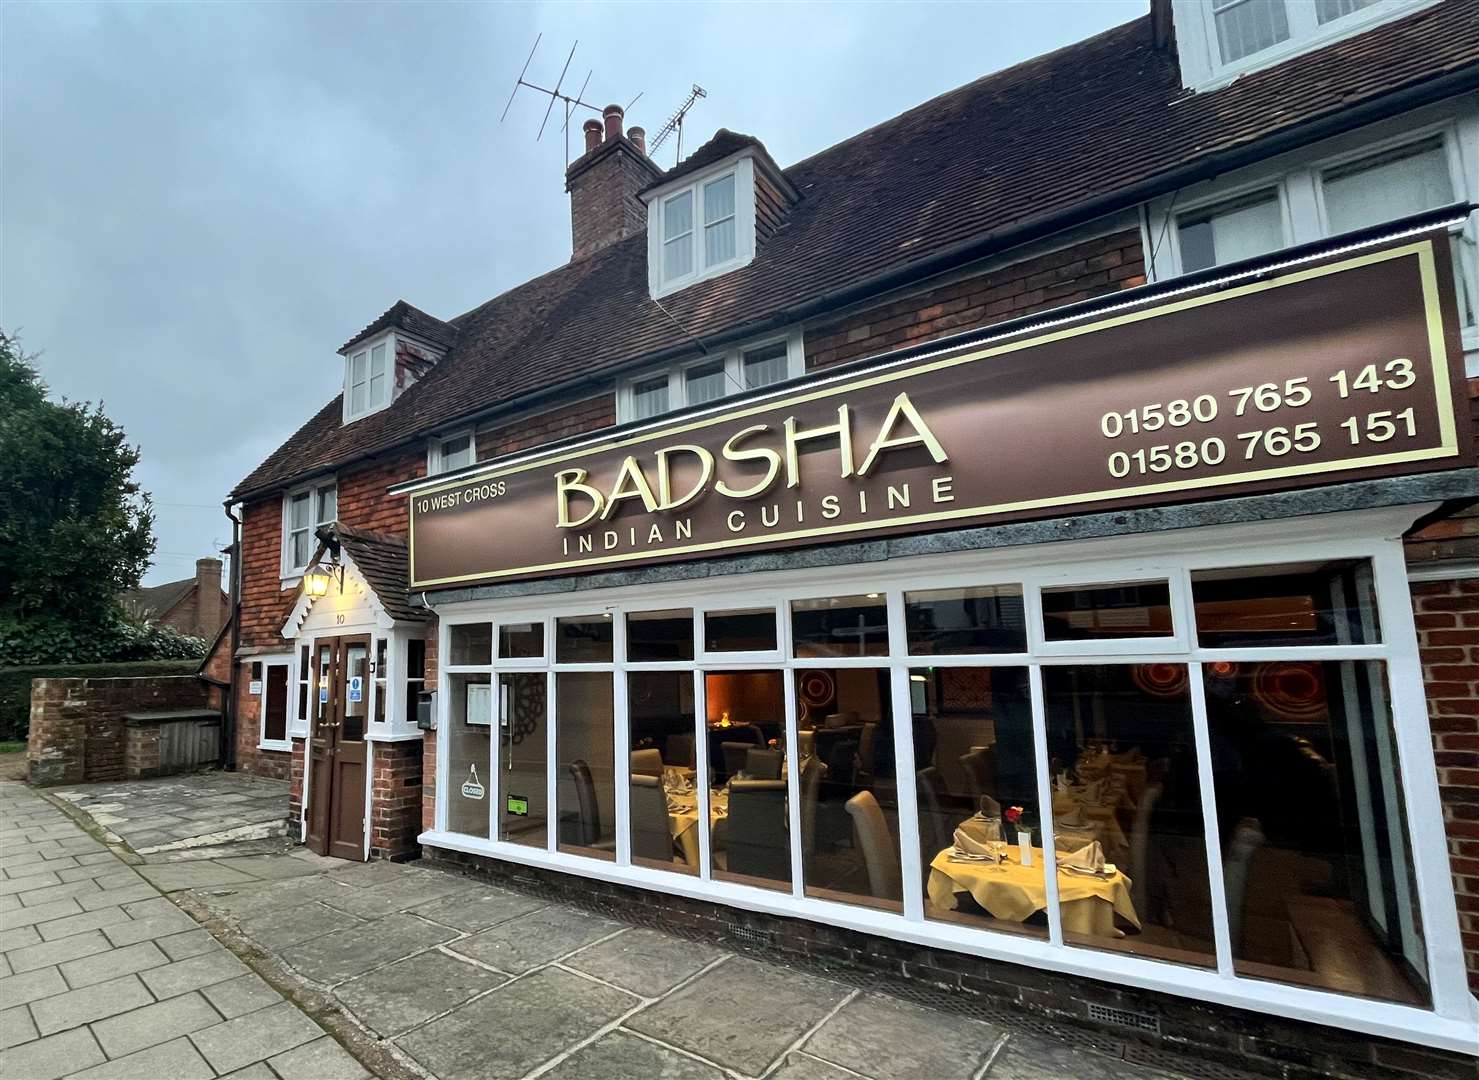 Badsha Indian Cuisine in Tenterden now has a five-star food hygiene rating